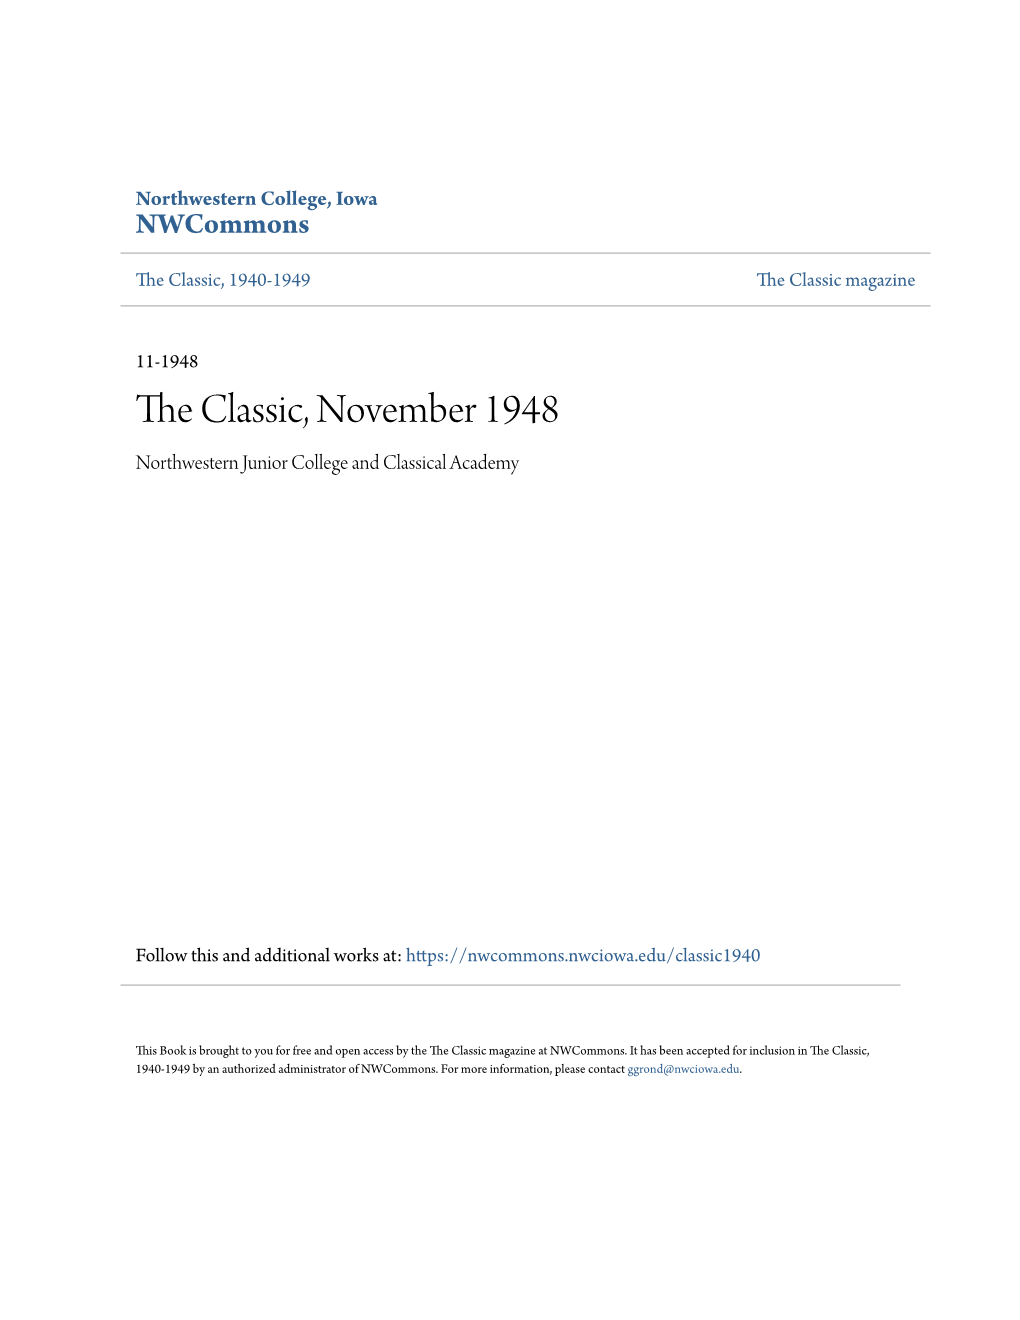 The Classic, November 1948